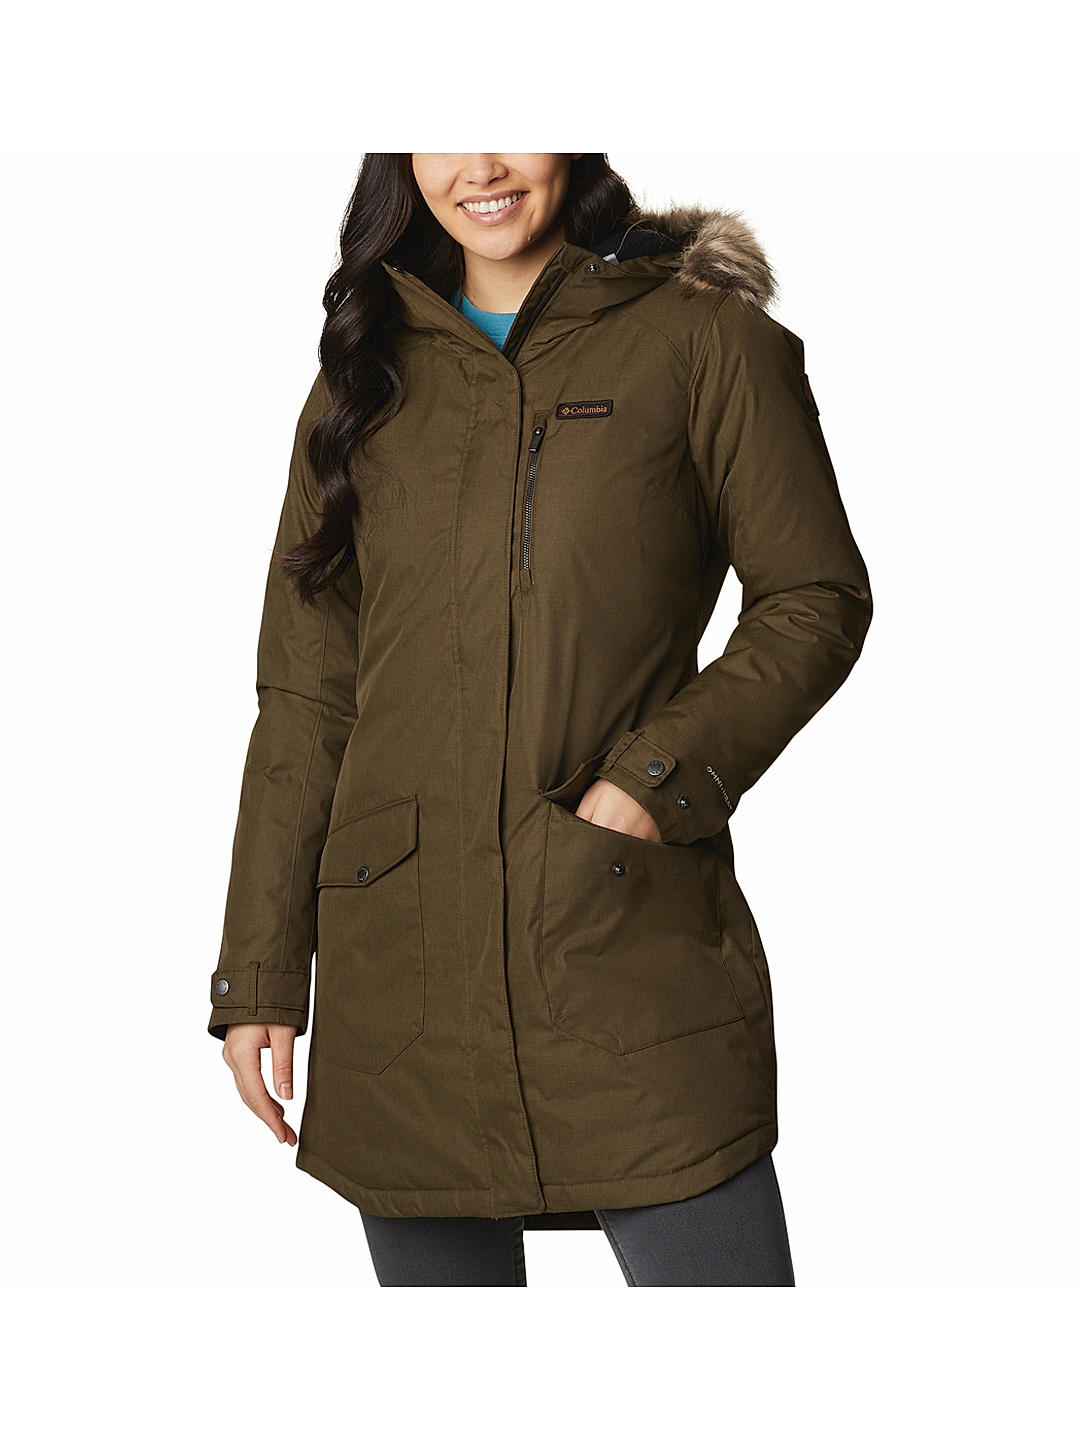 Buy Green Suttle Mountain Long Insulated Jacket for Women Online